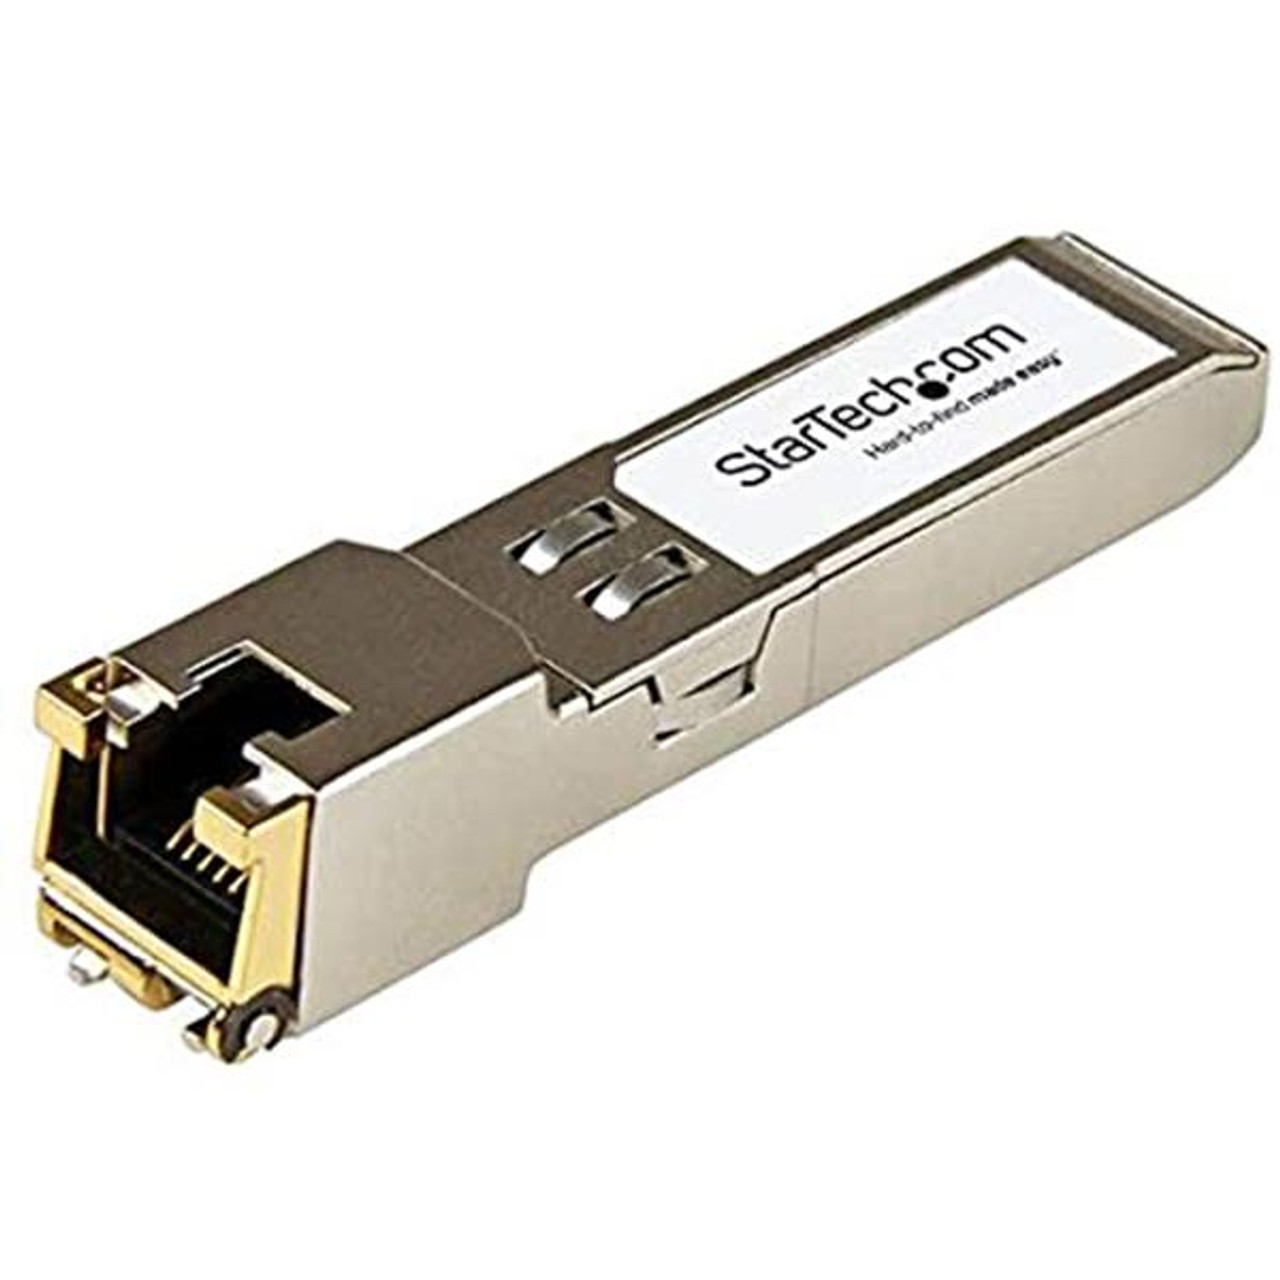 PLUS-T-ST StarTech 10Gbps 10GBase-T Copper 30m RJ-45 Connector SFP+ Transceiver Module for Palo Alto Networks Compatible